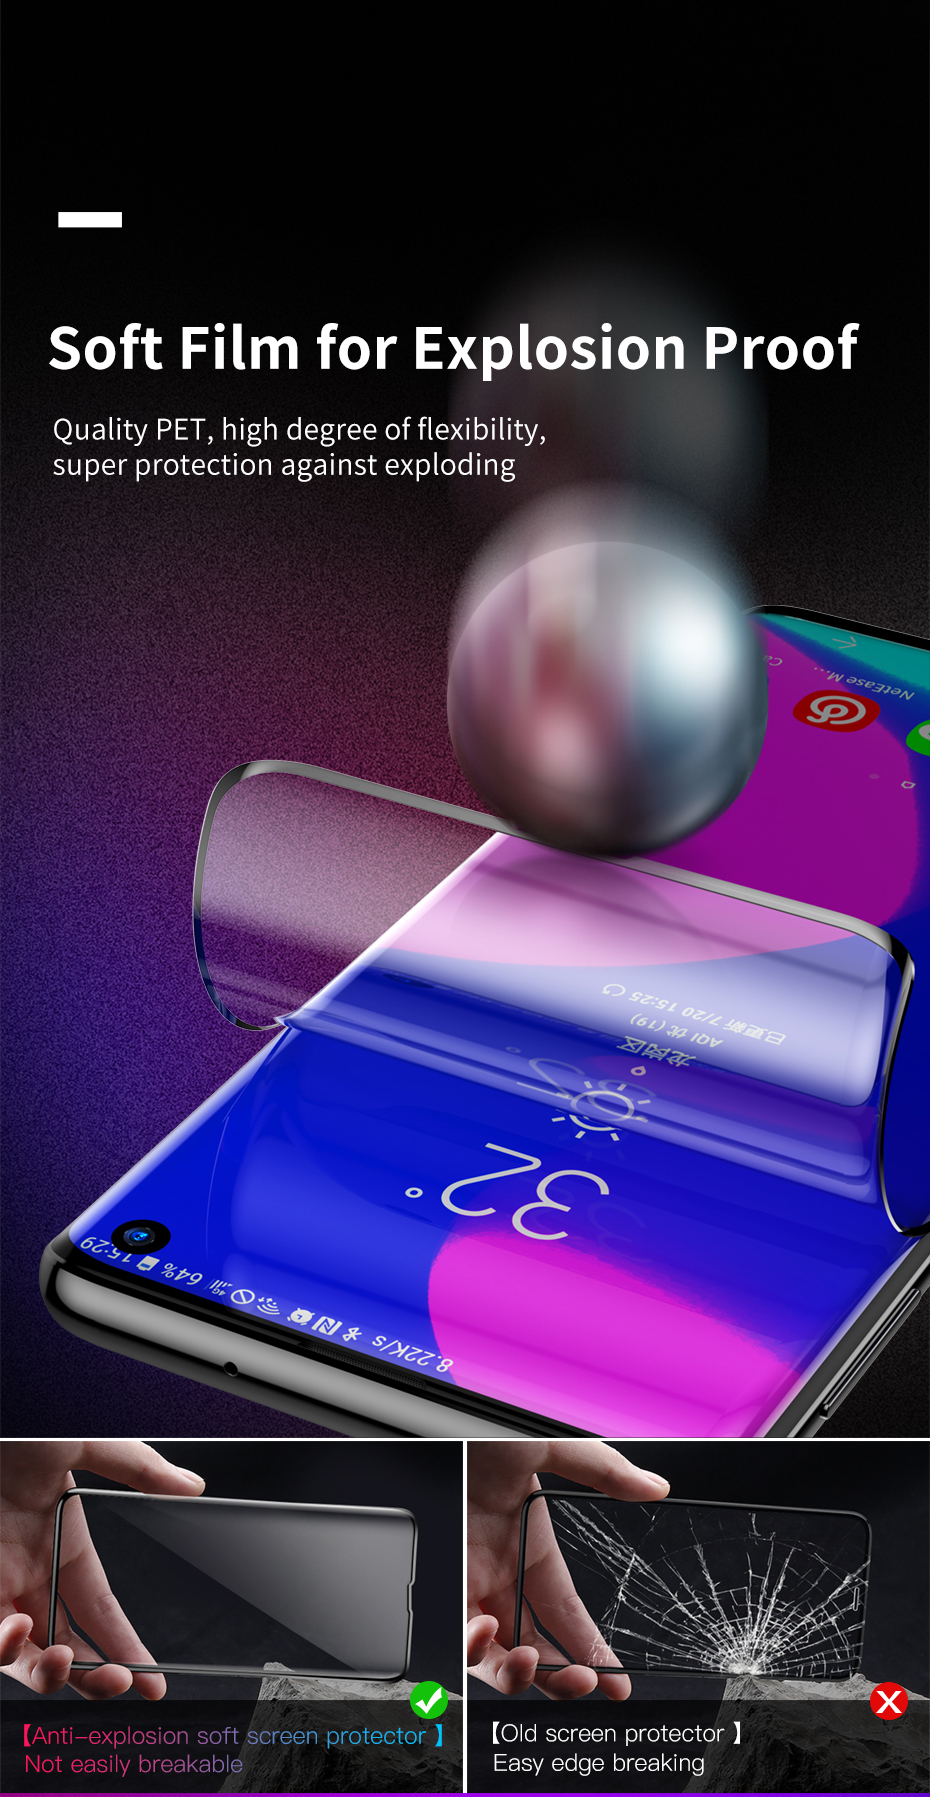 2-Packs-Baseus-Support-Ultrasonic-Fingerprint-Screen-Protector-For-Samsung-Galaxy-S10S10-Plus-Soft-C-1442898